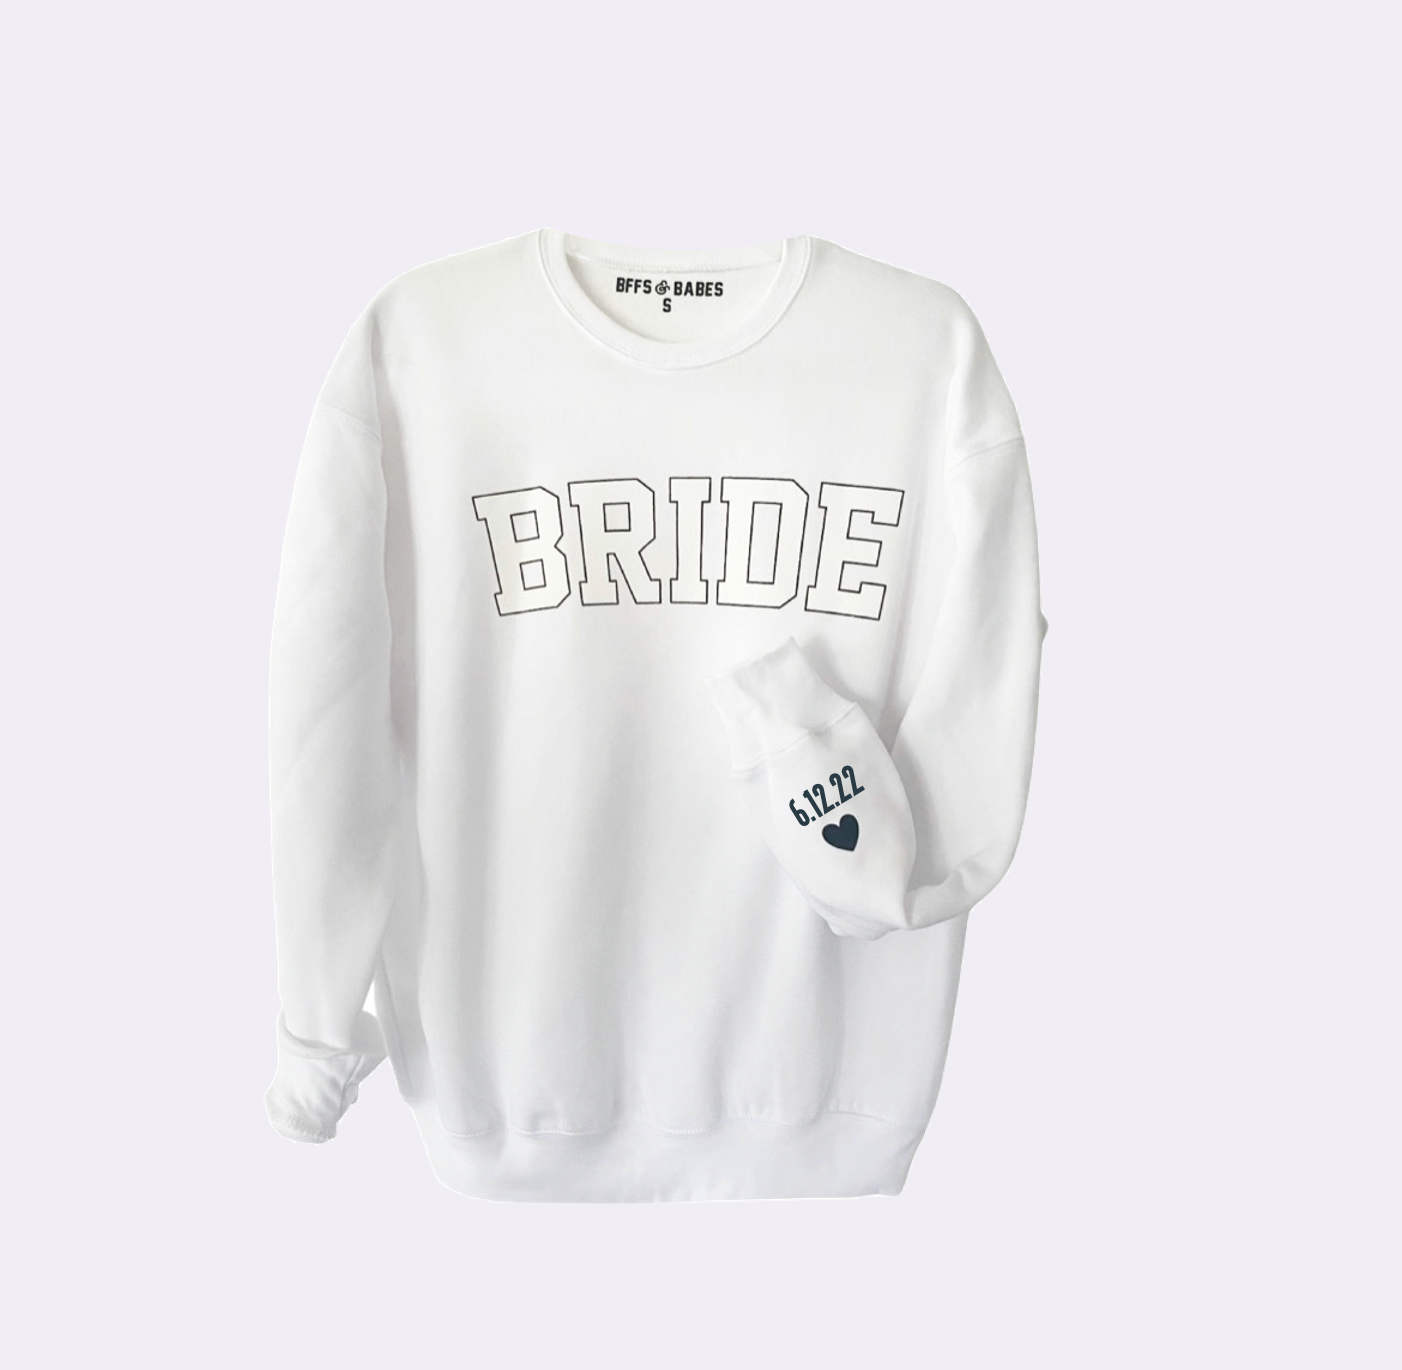 BABES BFFS THE LOVE ON cuff bride sweatshirt – with white & ♡ personalized CUFF